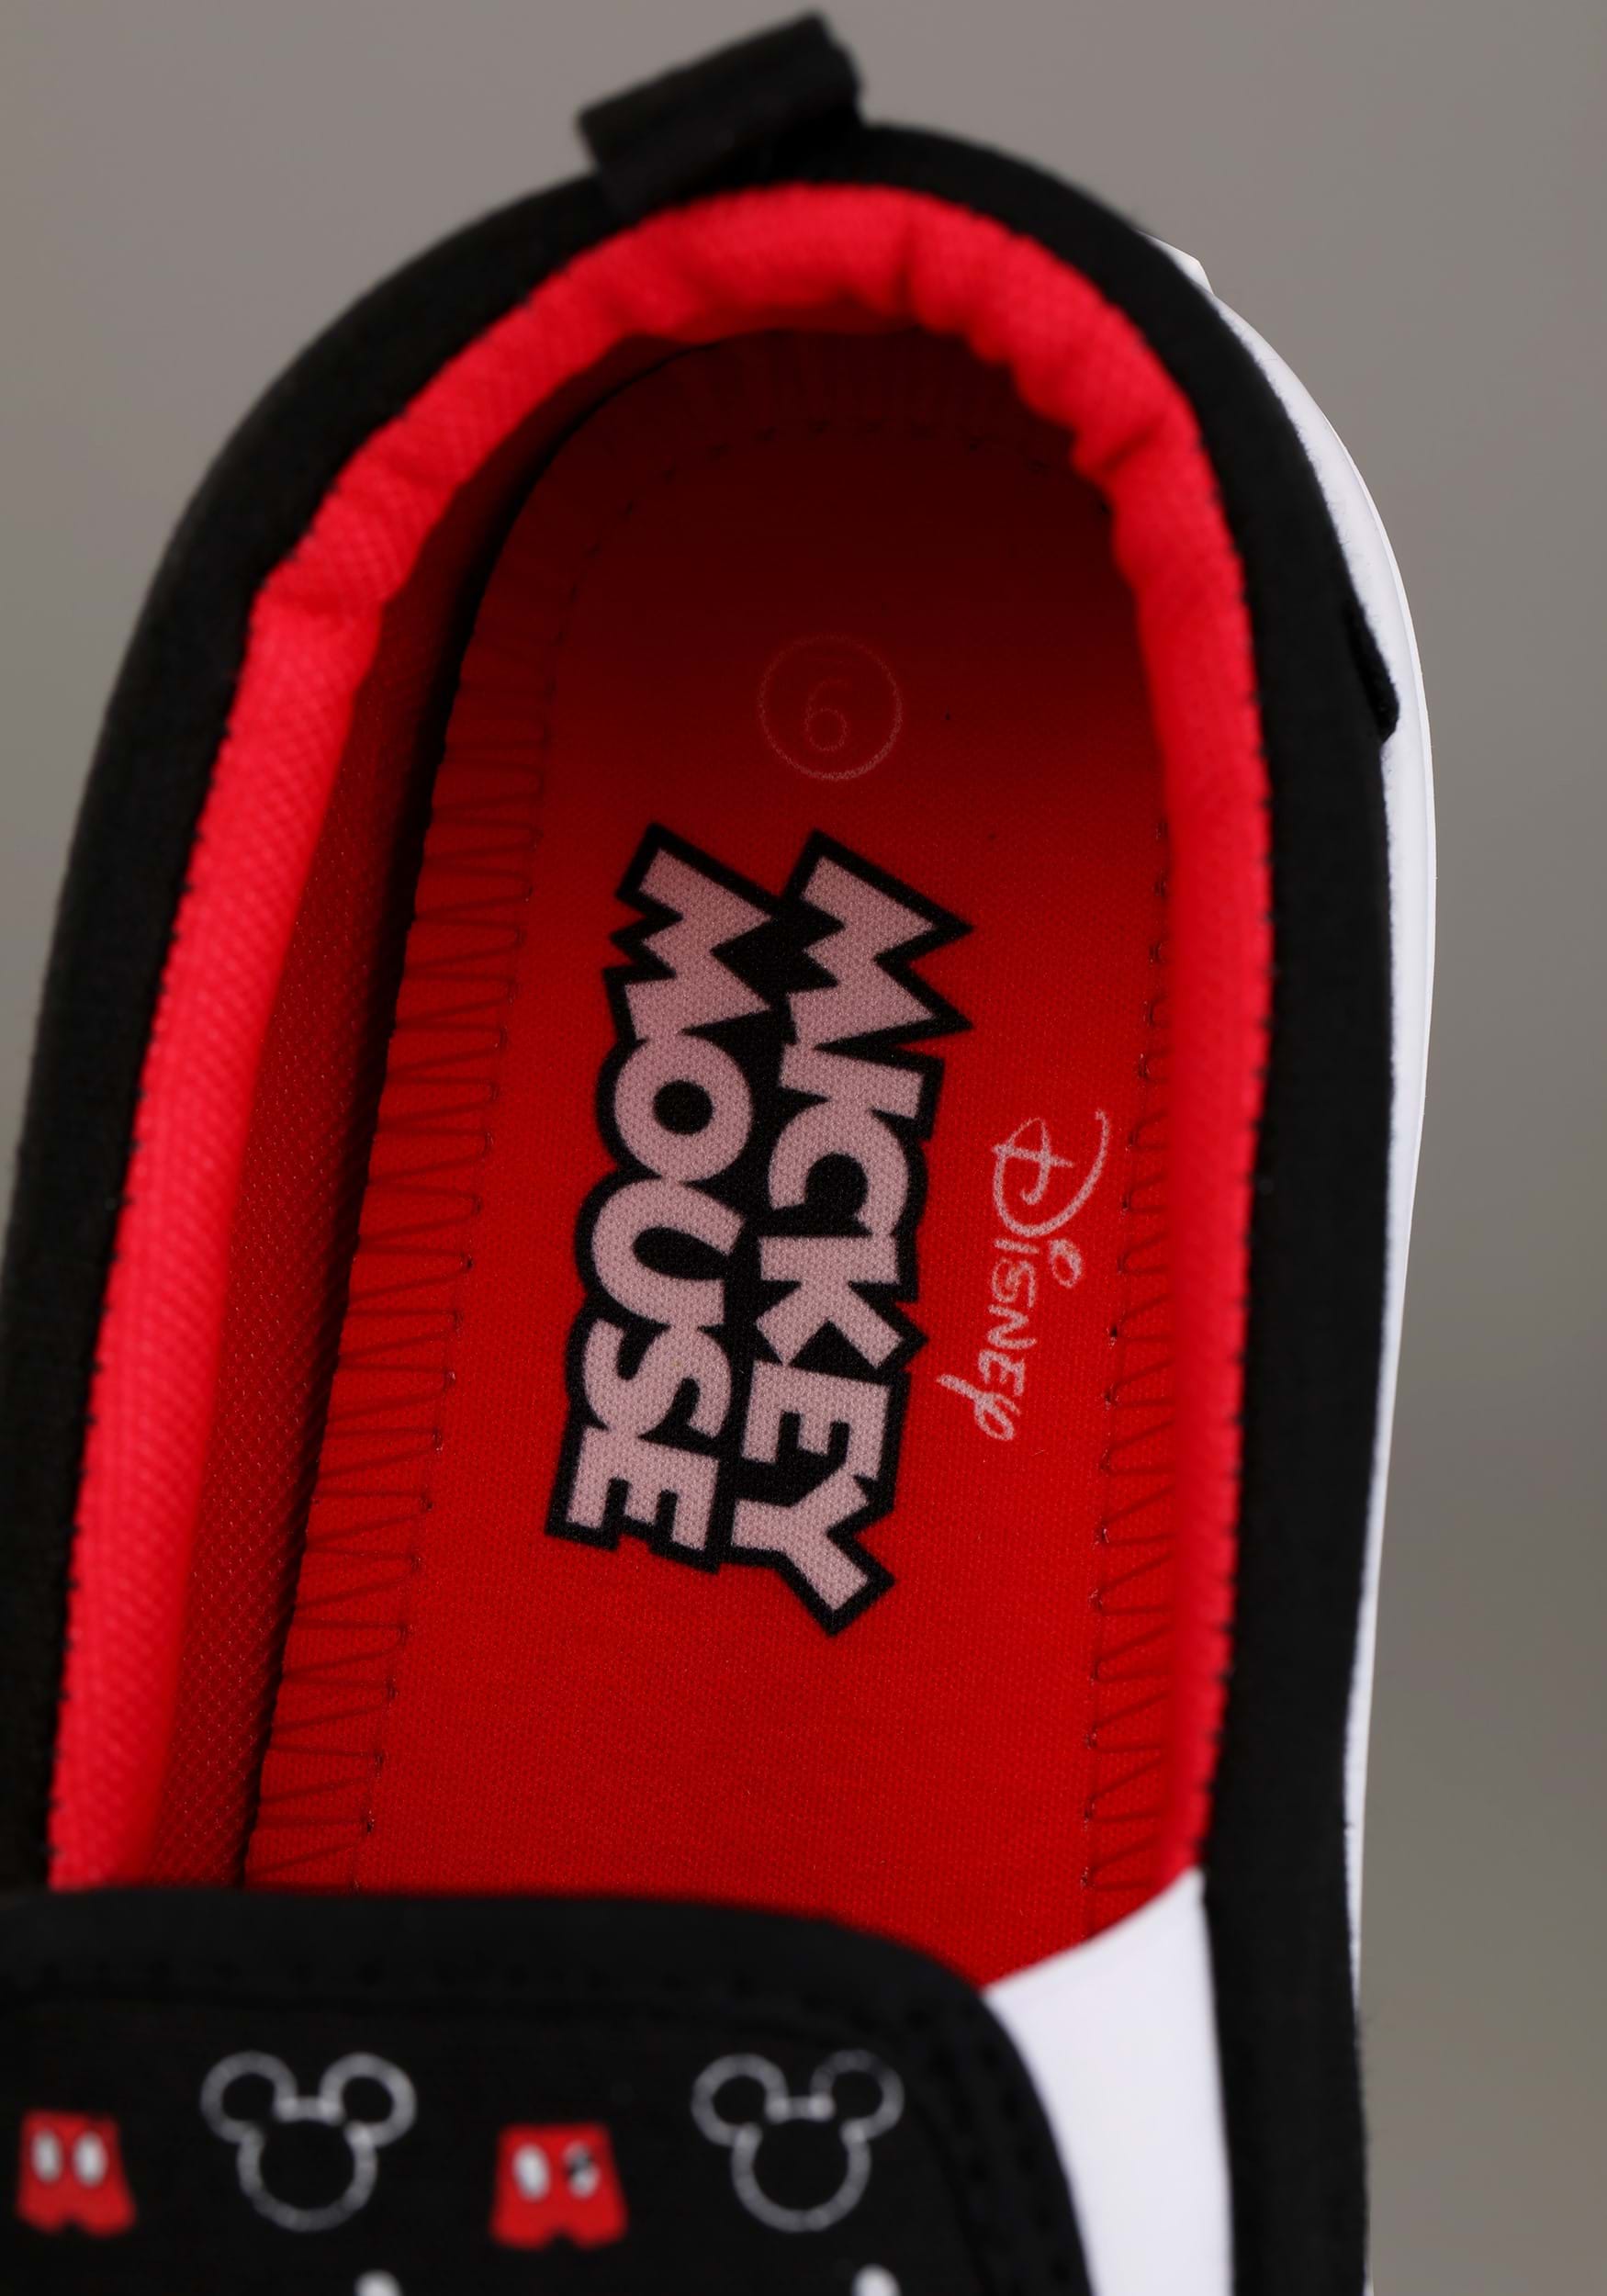 Mickey Mouse Men's Canvas Shoe